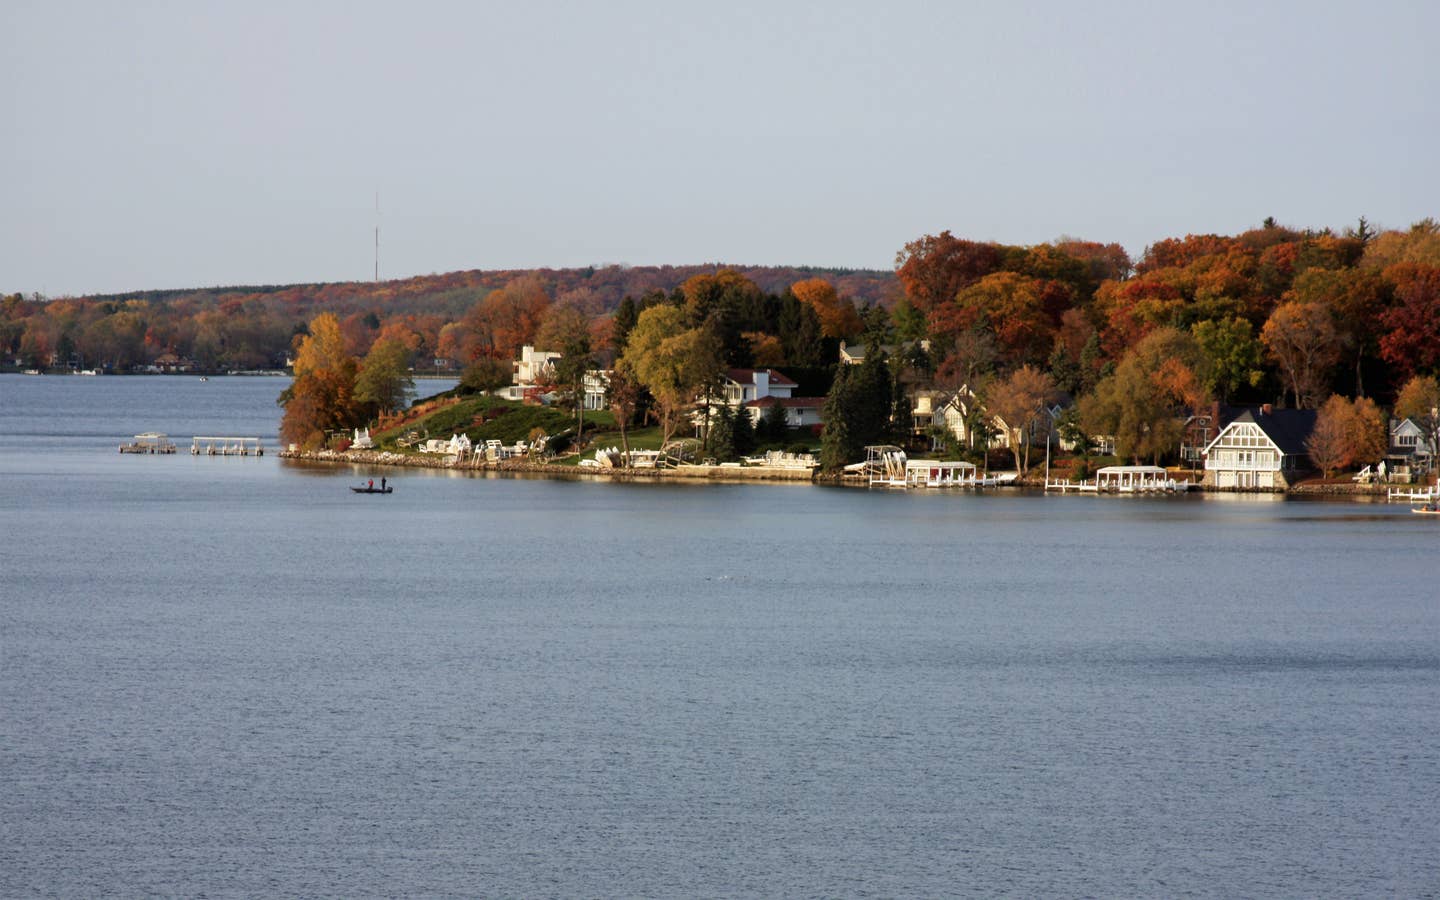 View of trees on edge of lake in Lake Geneva, Wisconsin.